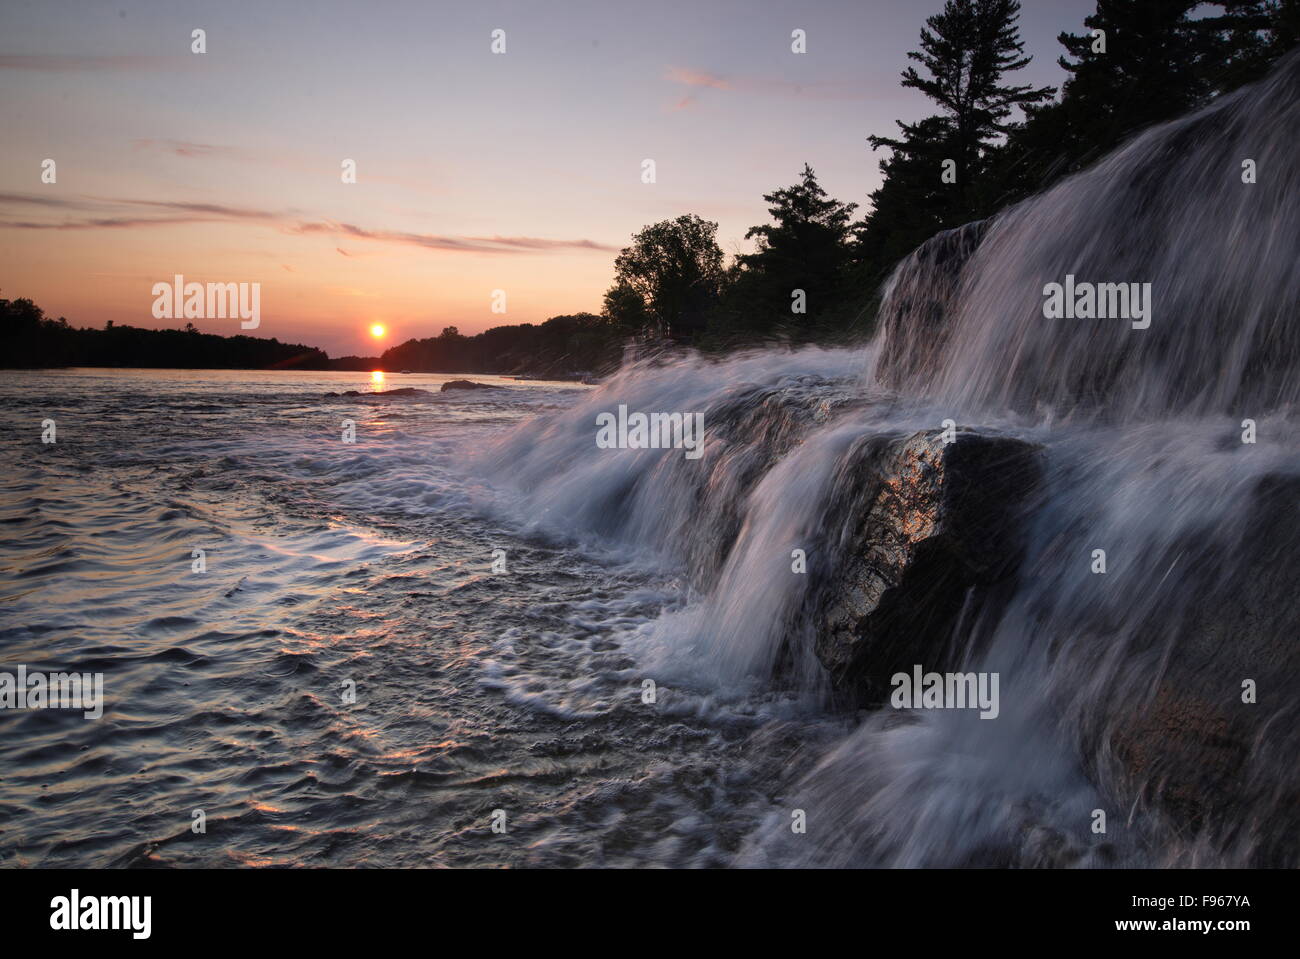 Bala Falls at sunset, Moon River, Muskoka, Ontario, Canada Stock Photo